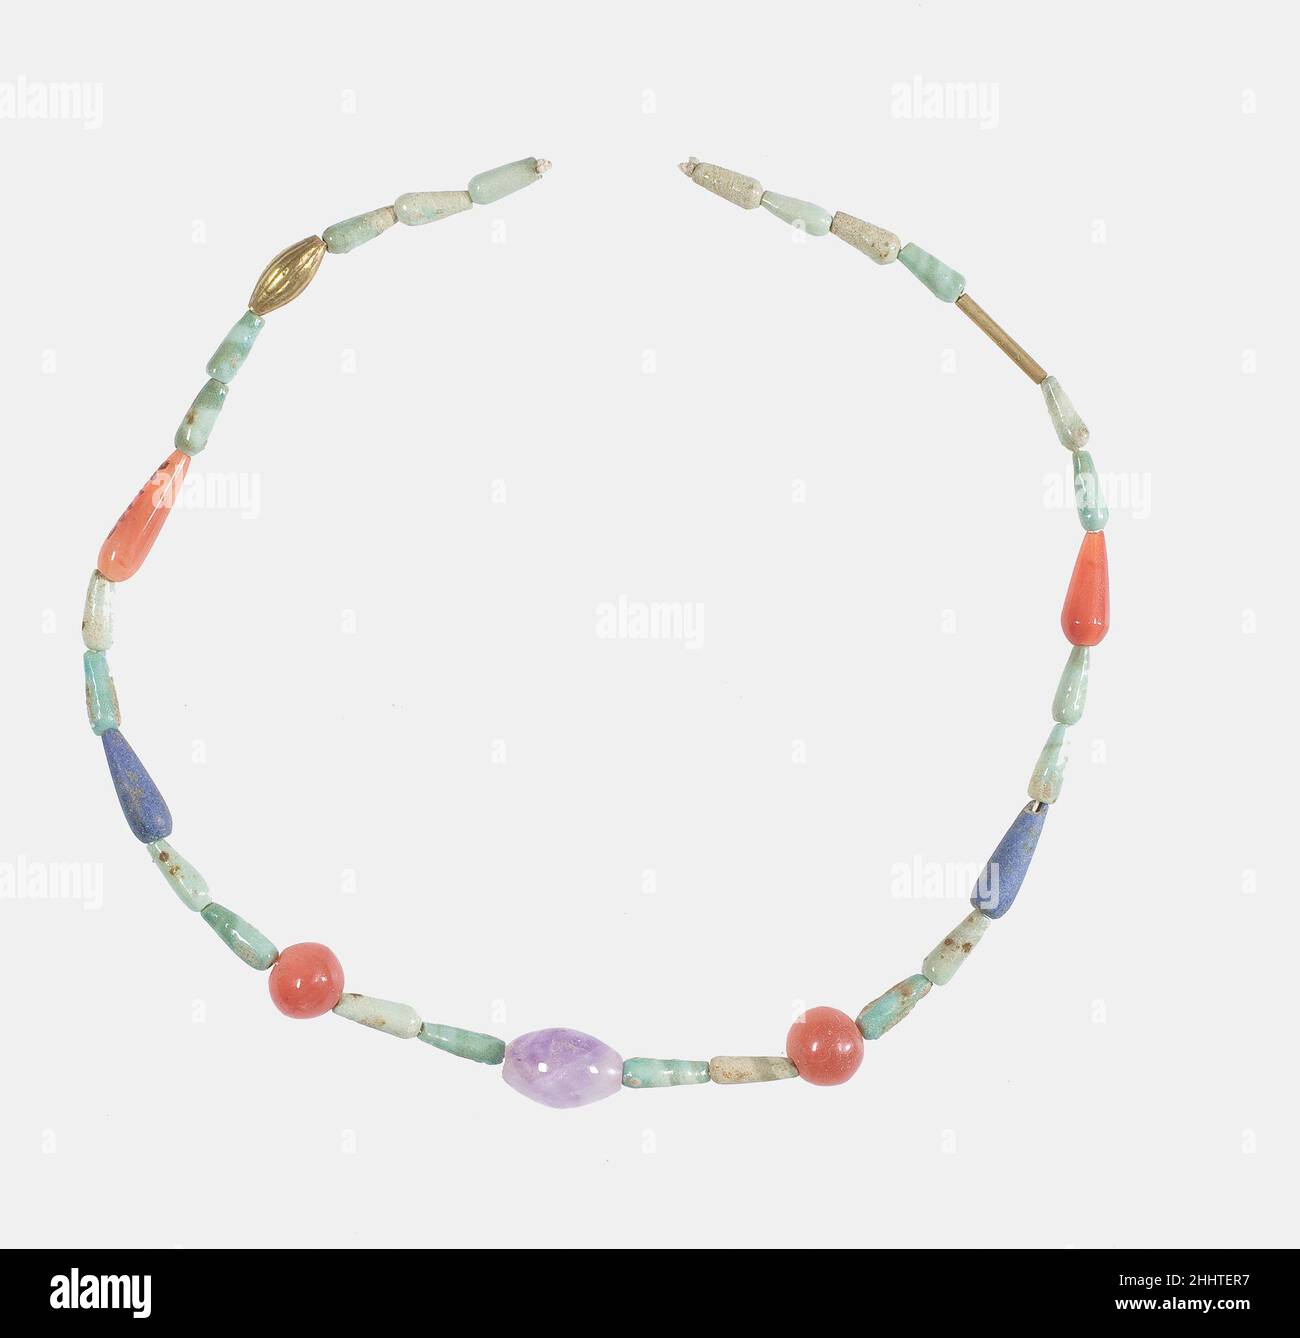 108 Mala Beads, Ankh Necklace Rosewood & Lapis Lazuli Egyptian Jewelery